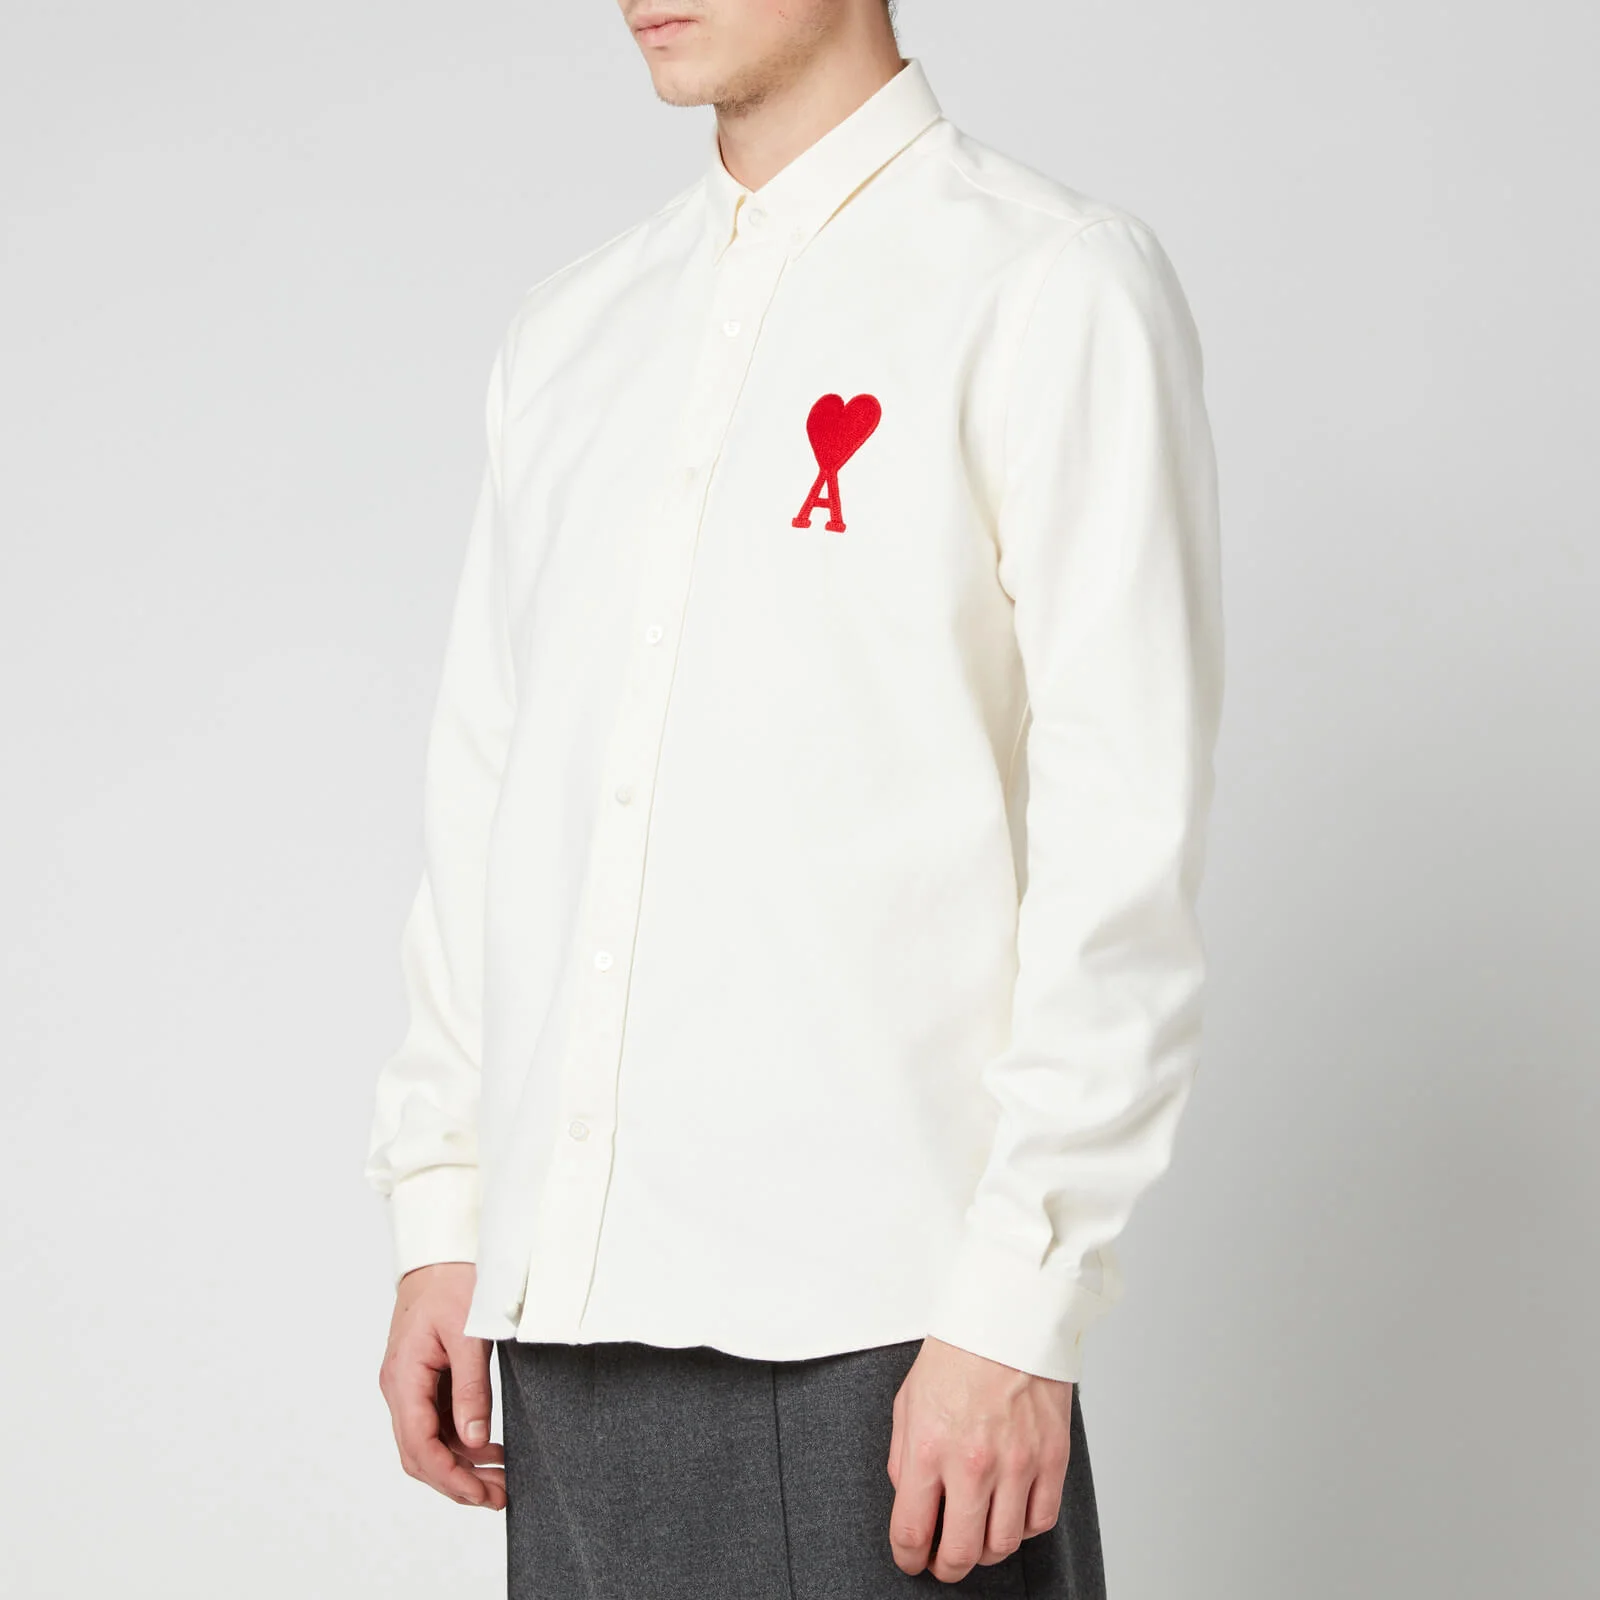 AMI Men's Button Down Big De Coeur Oxford Shirt - White Image 1